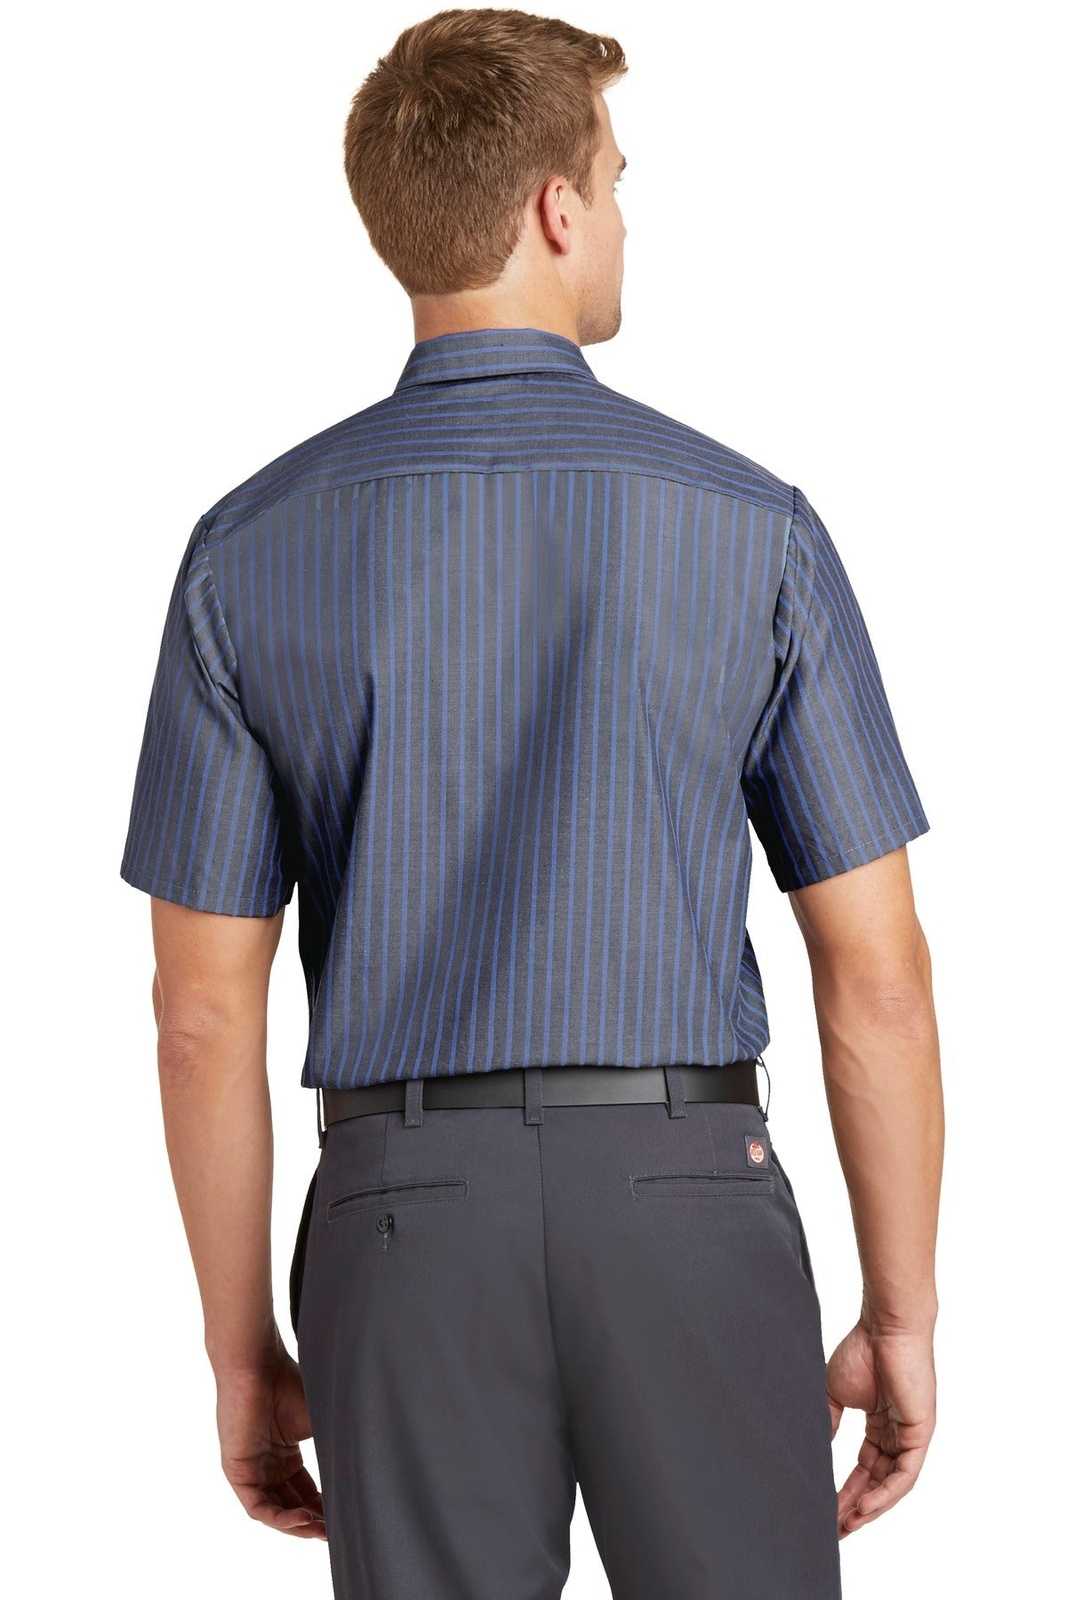 Red Kap CS20 Short Sleeve Striped Industrial Work Shirt - Gray/ Blue - HIT a Double - 1